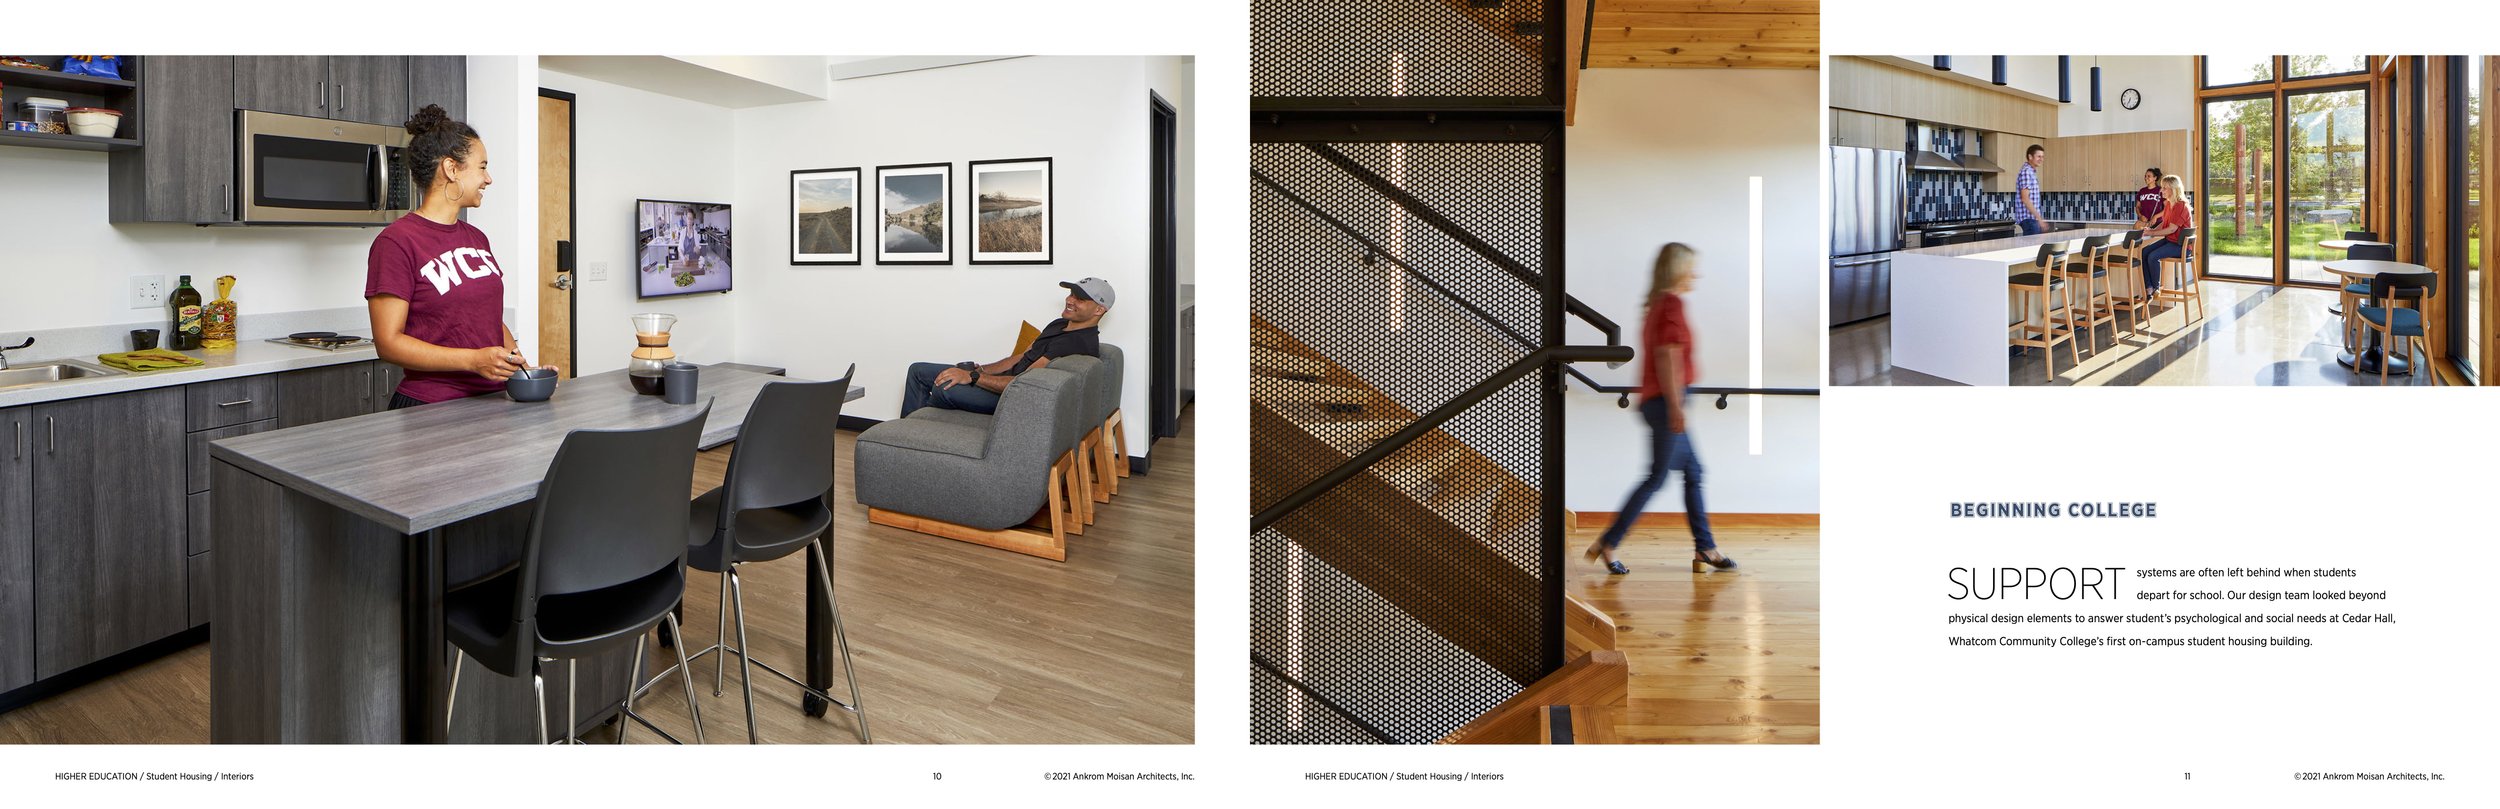 Student Housing Interiors-spreads 4 copy.jpg